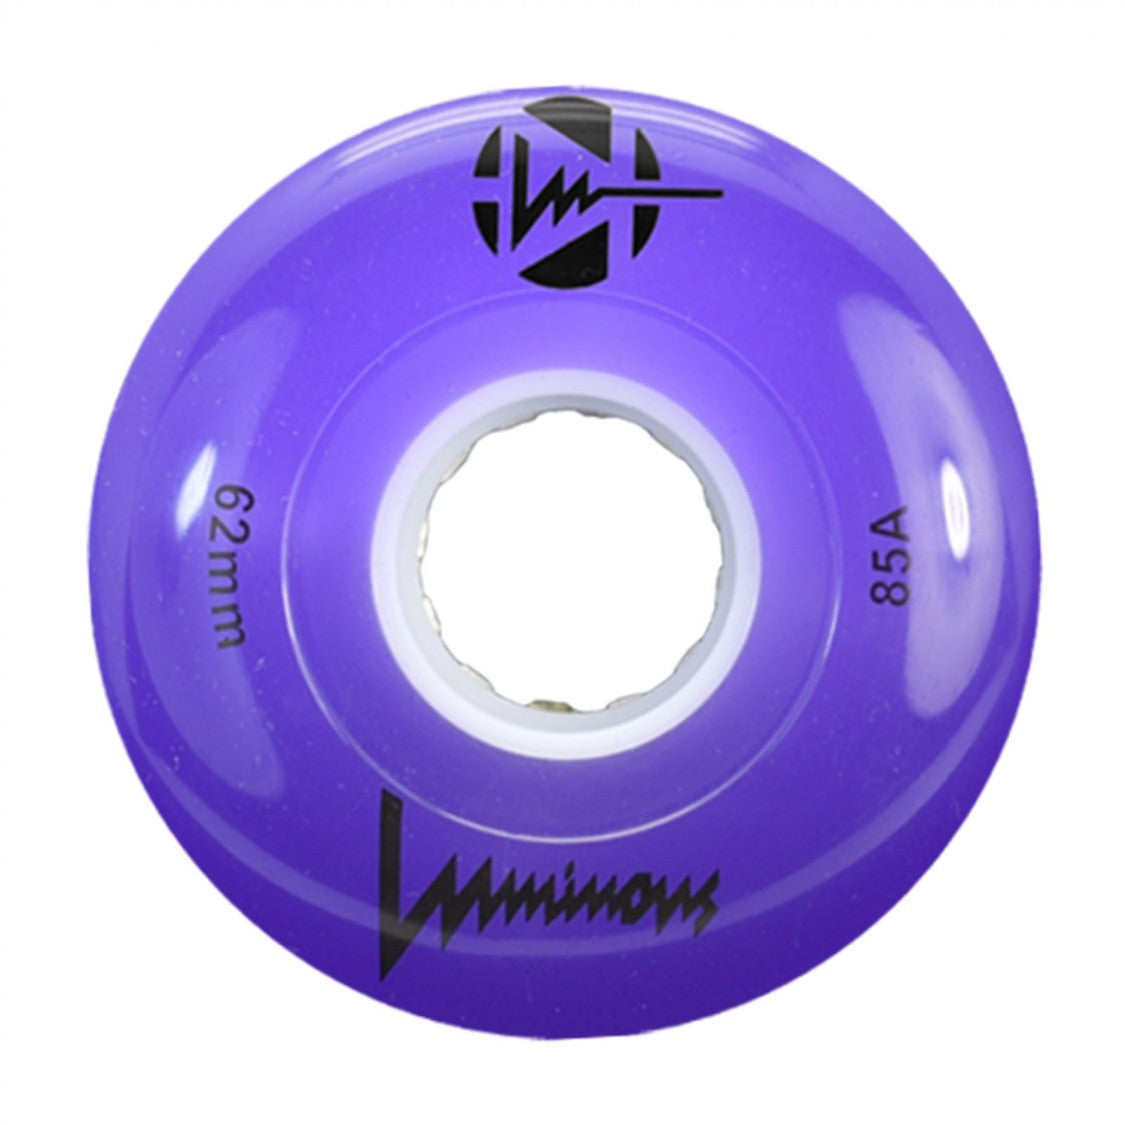 Luminous LED Quad 62mm 85a 4pk Purple Roller Skate Wheels